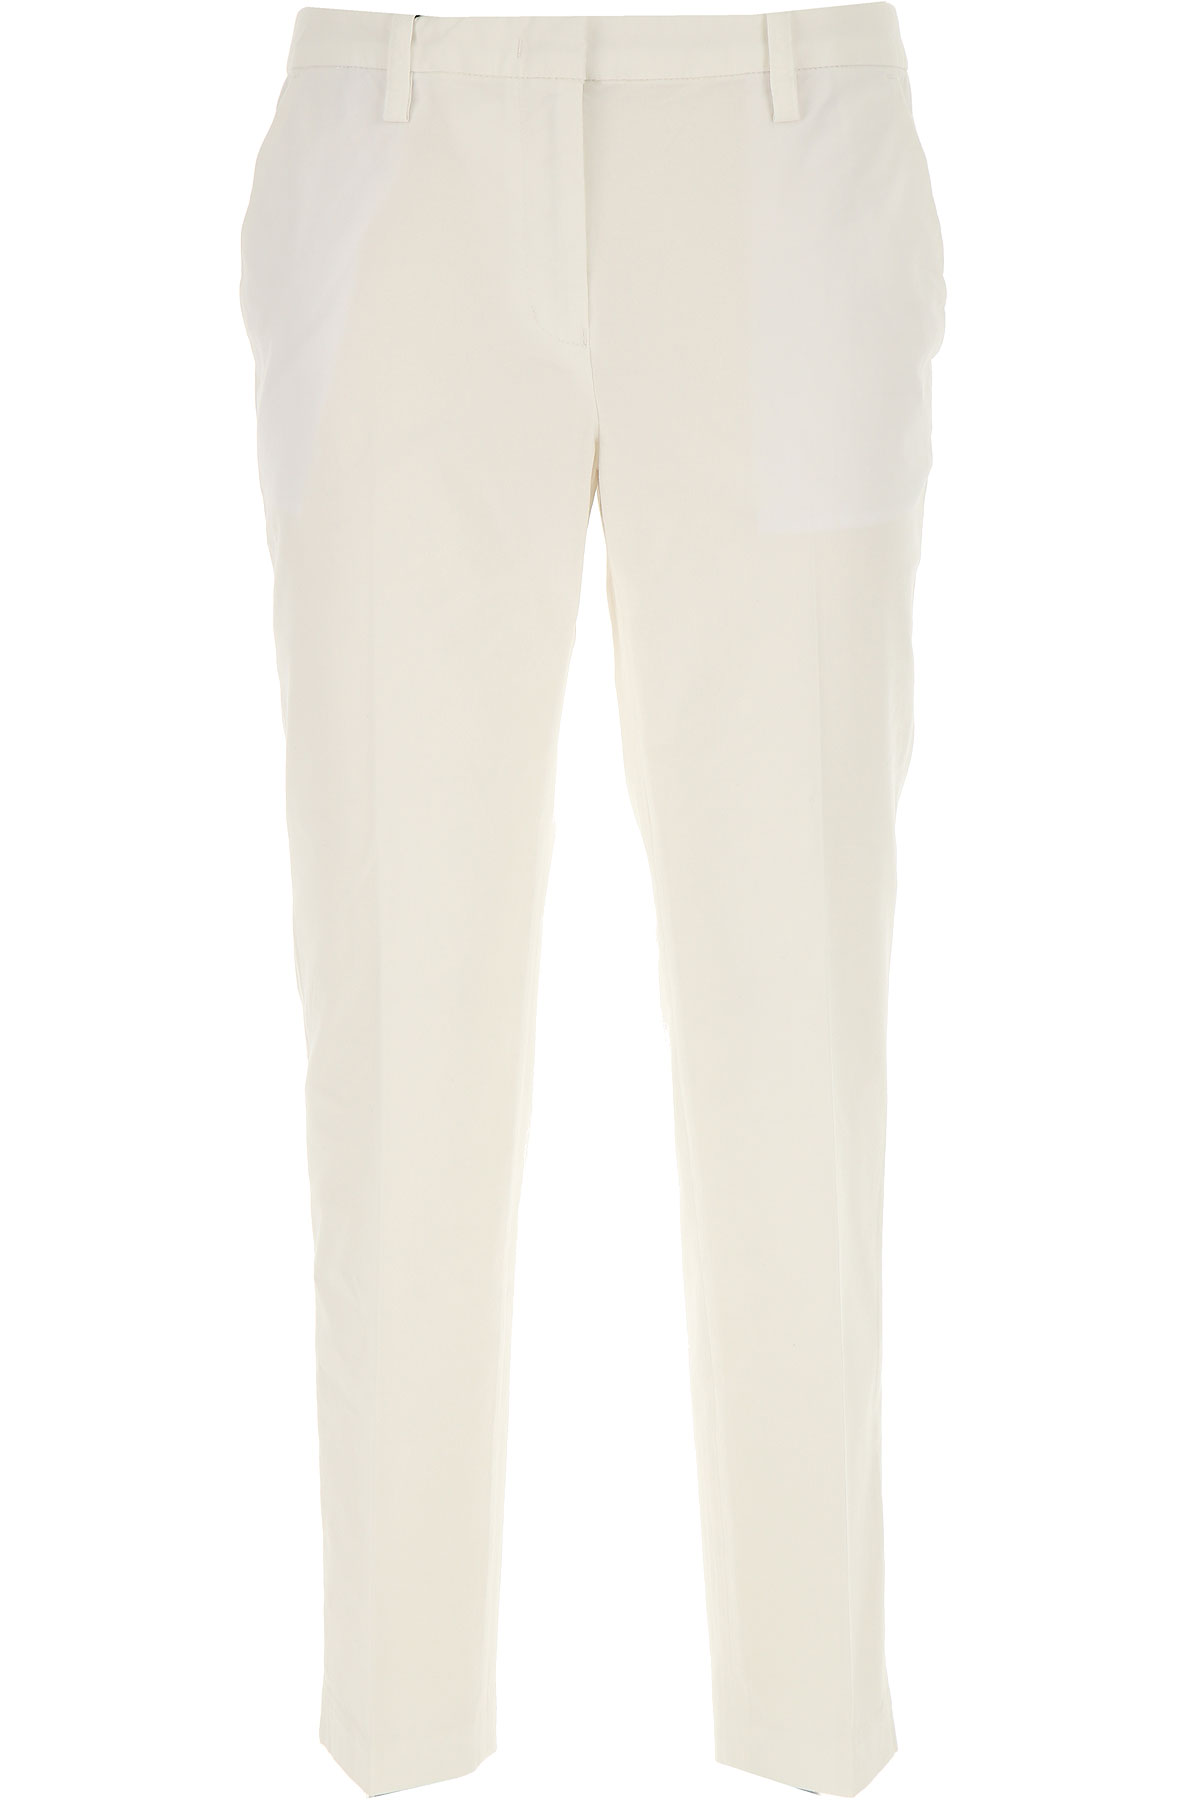 Emporio Armani Pantalon Femme, Blanc, Coton, 2017, 42 44 46 48